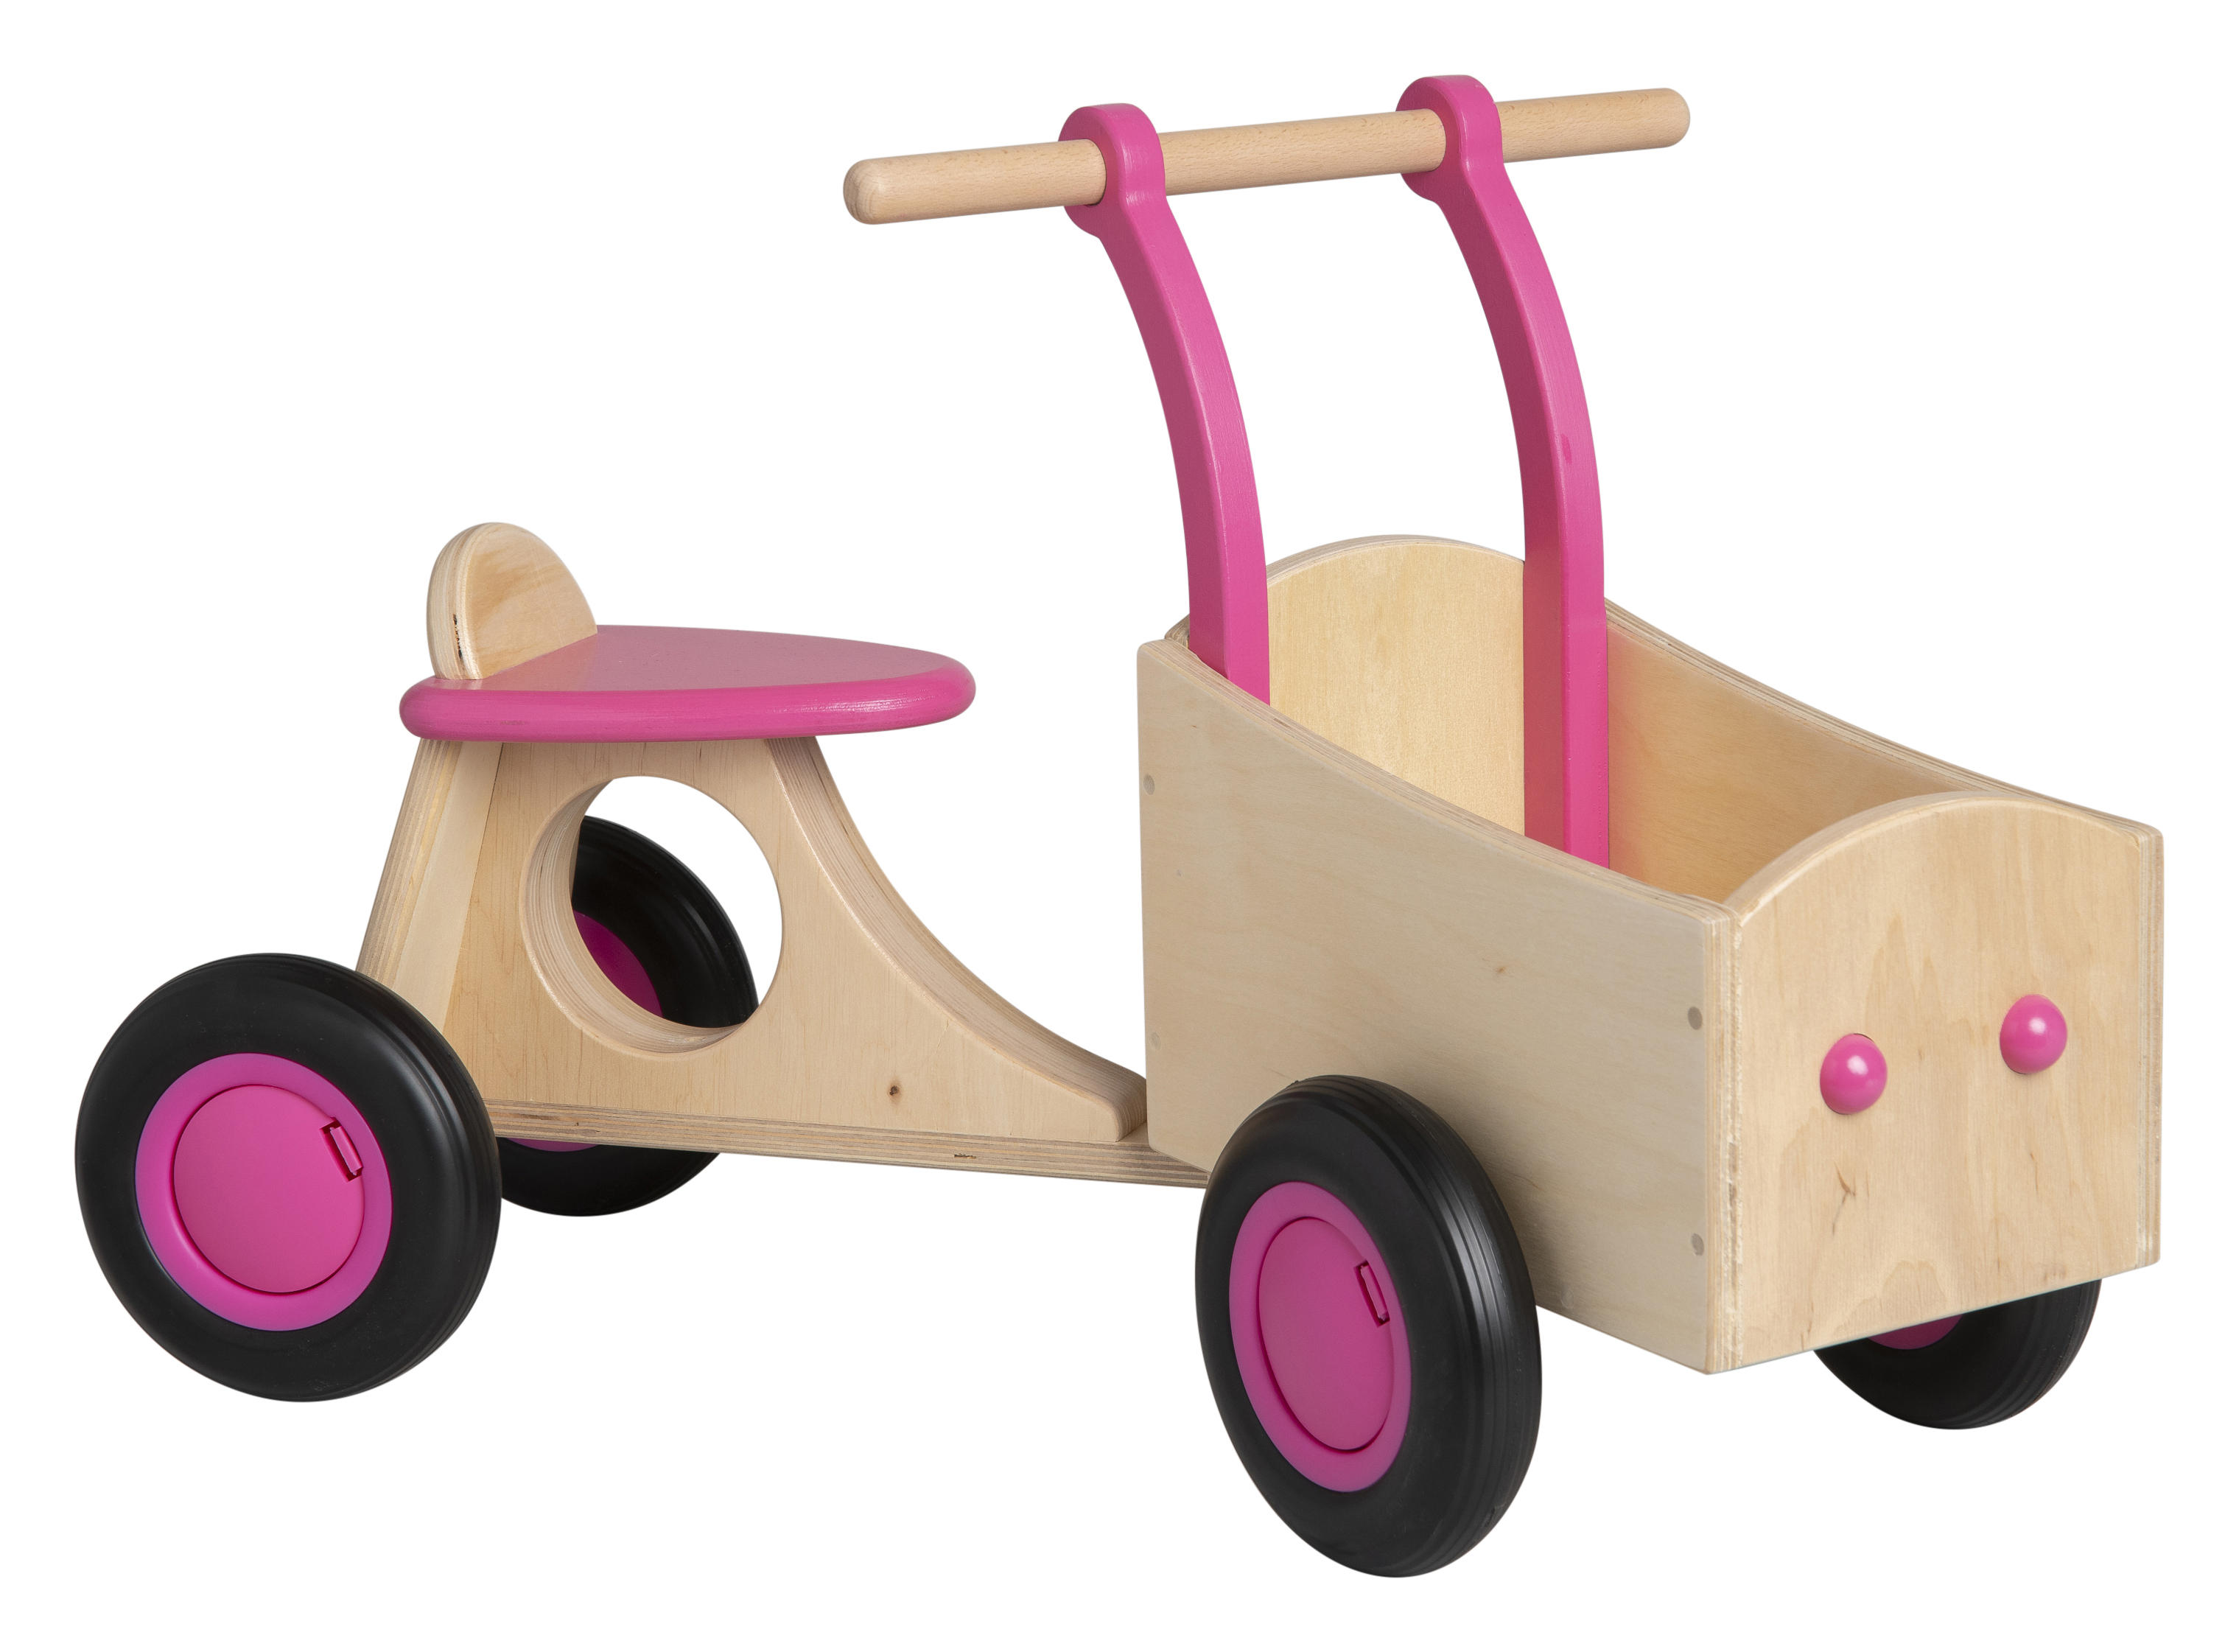 Paragraaf Steil Picknicken Van Dijk Toys houten kinder loop bakfiets vanaf 1 jaar - Roze (Kinderopvang  kwaliteit)